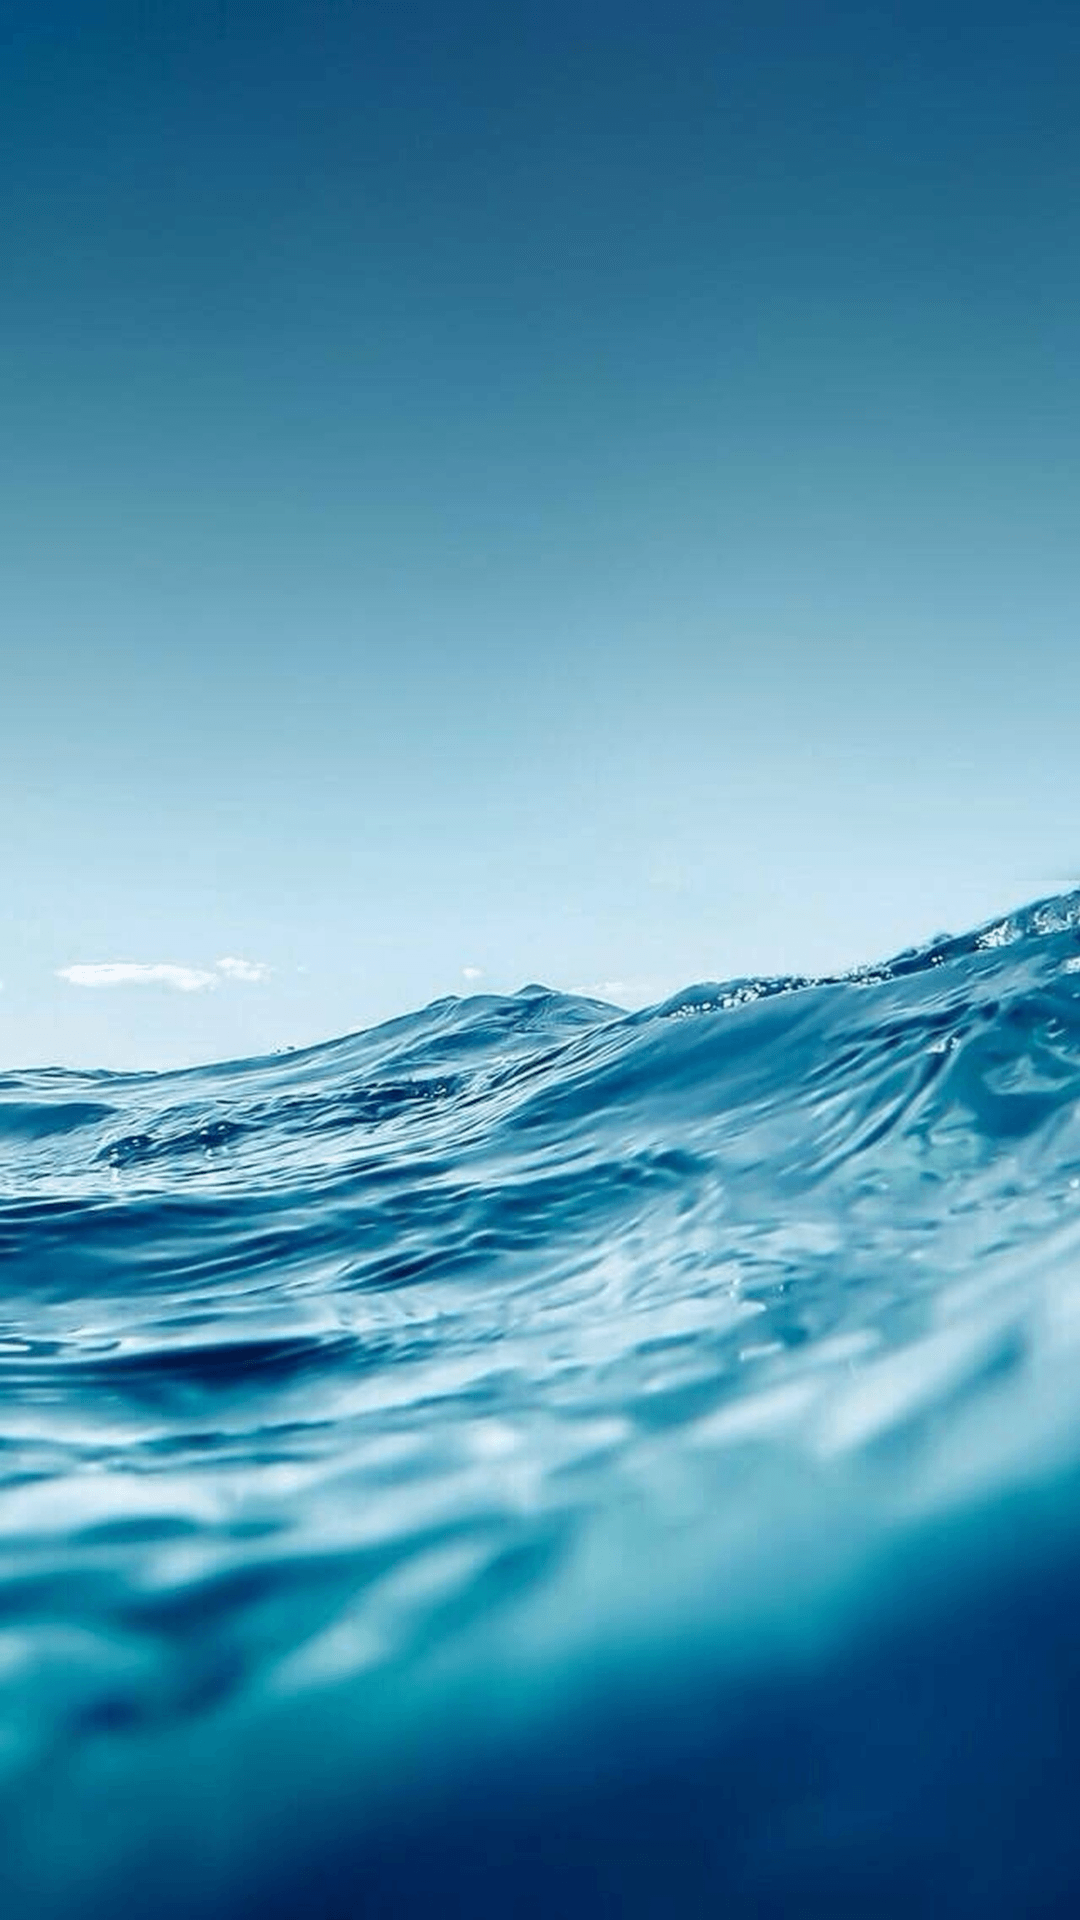 1080x1920 Ocean Wave Hình nền iPhone Plus 1080x1920 idolza